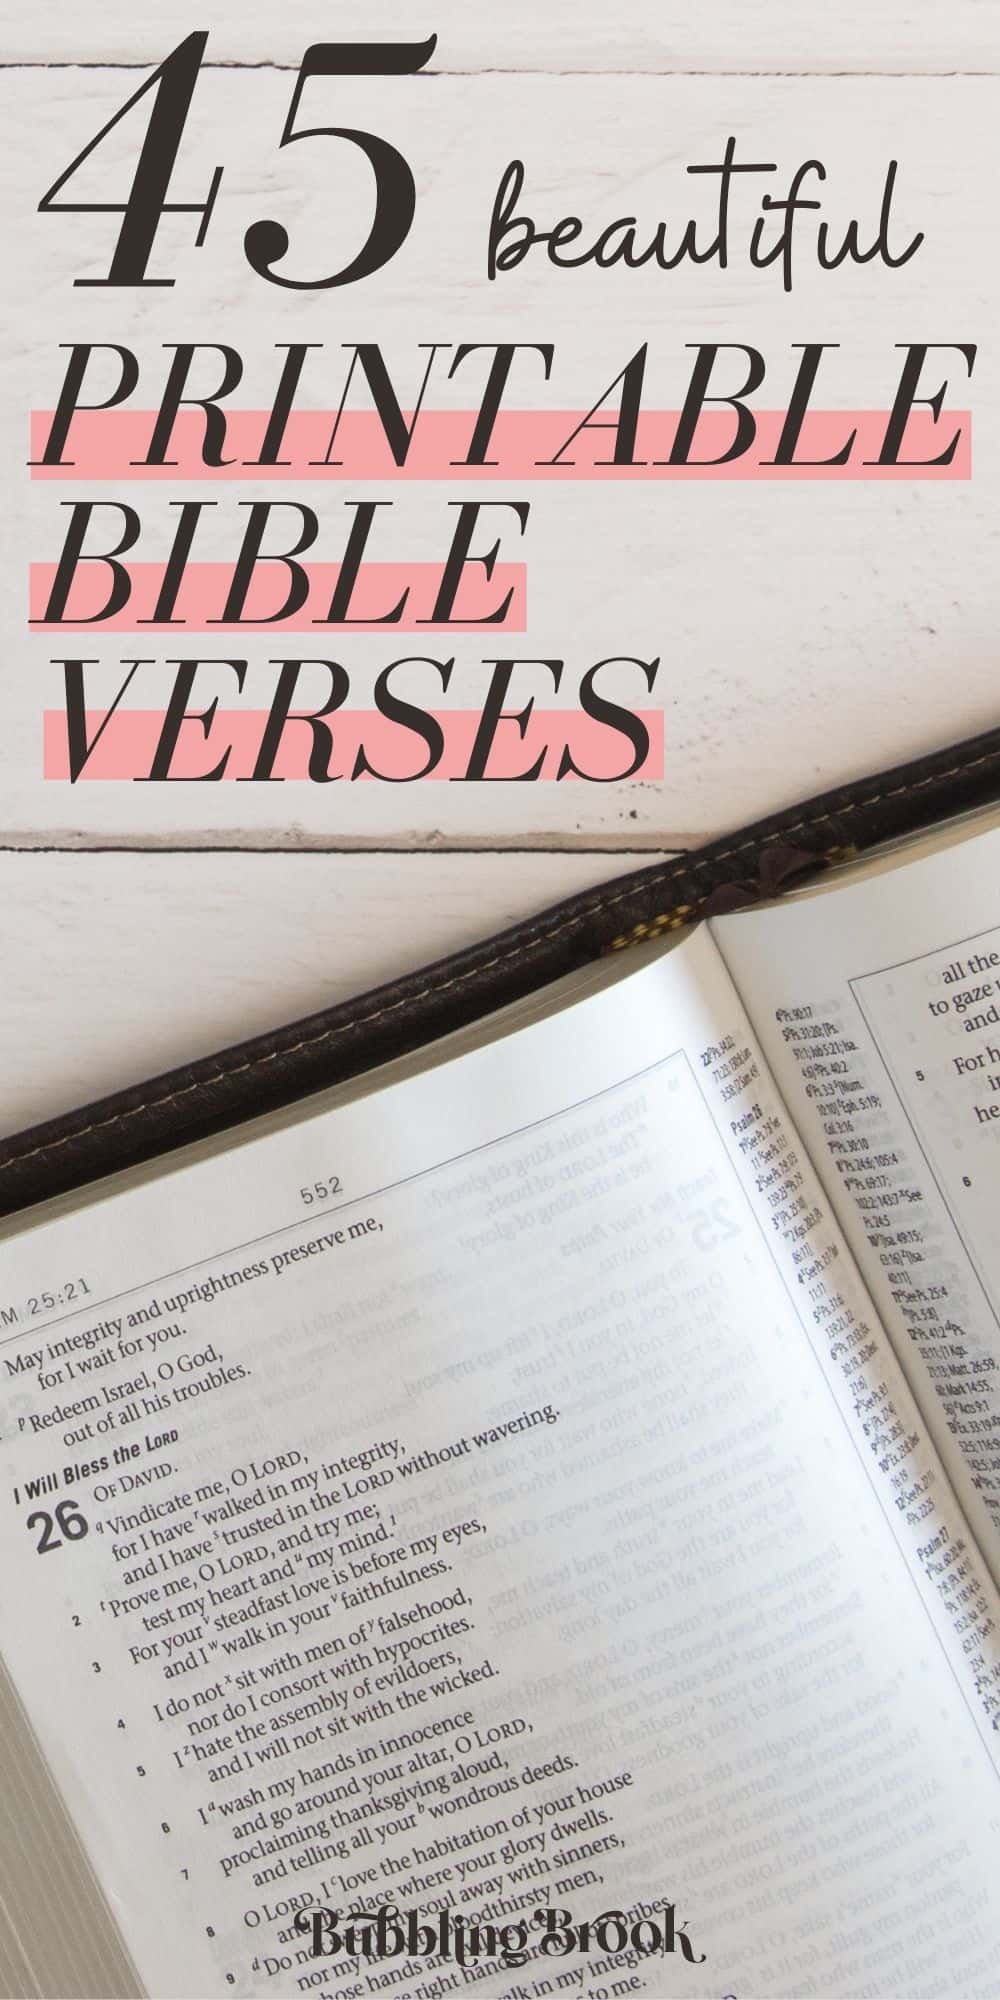 45 Printable Bible Verses - pin for Pinterest